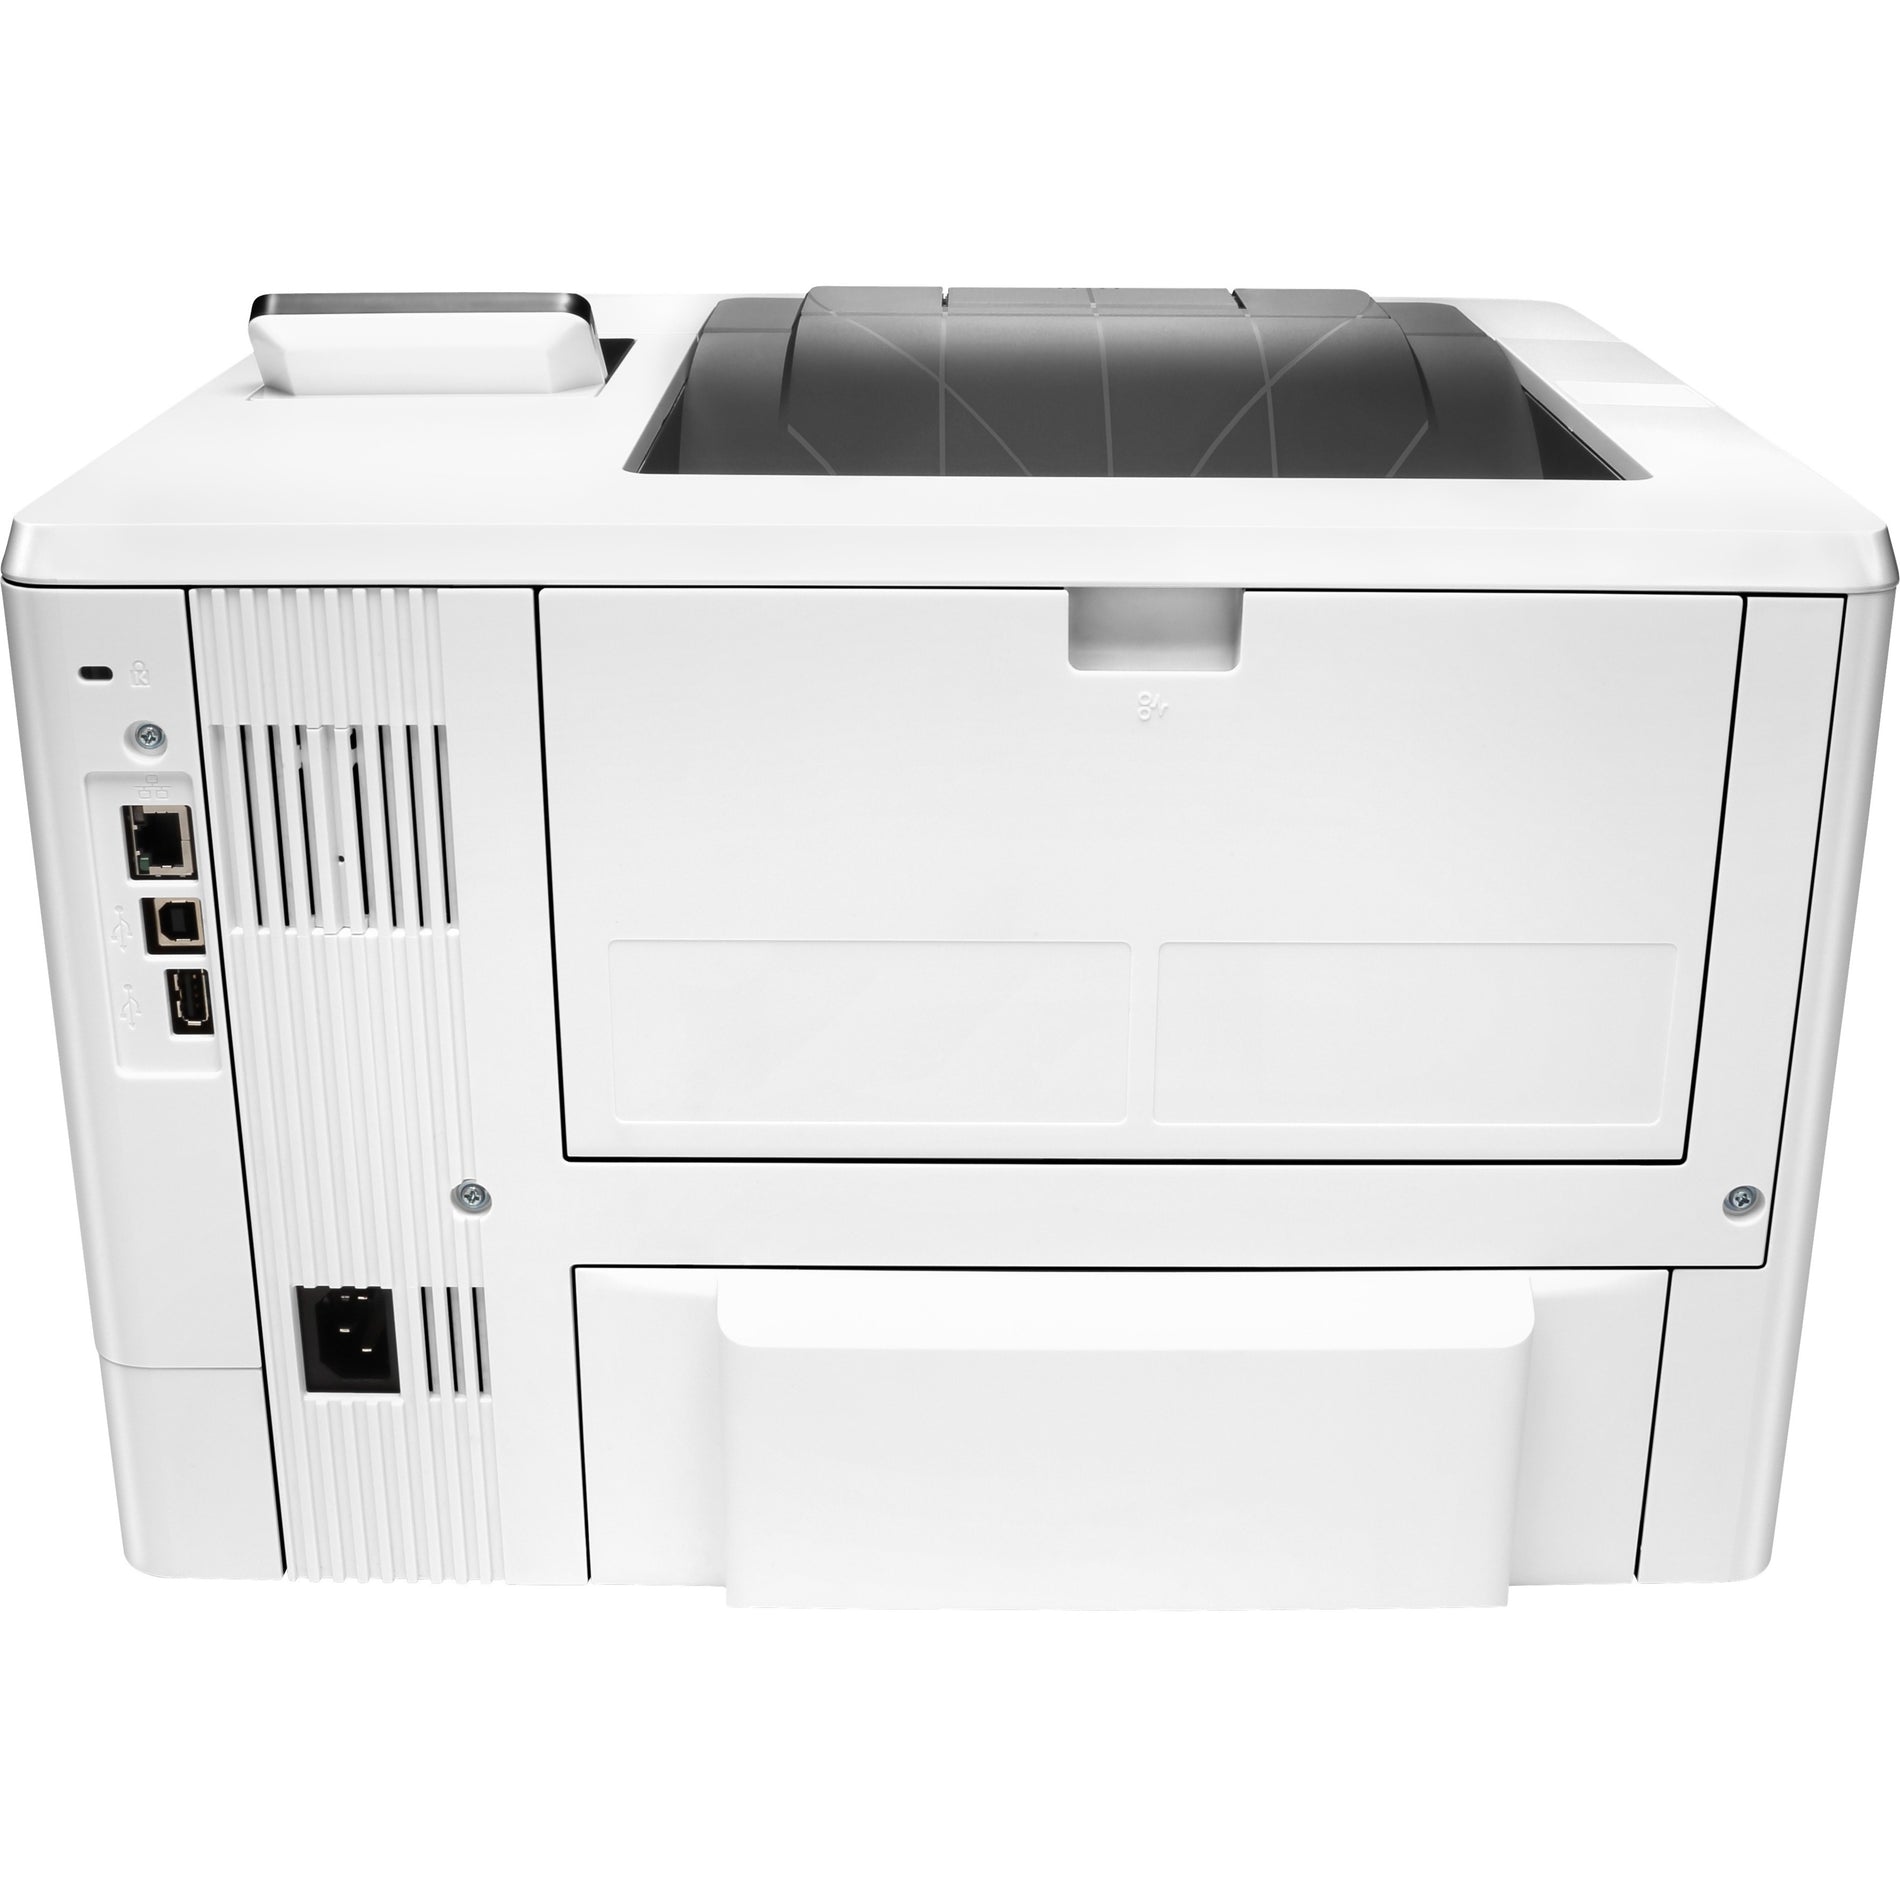 HP J8H61A#BGJ LaserJet Pro M501dn Desktop Laser Printer, Monochrome, Automatic Duplex Printing, 45 ppm, 4800 x 600 dpi